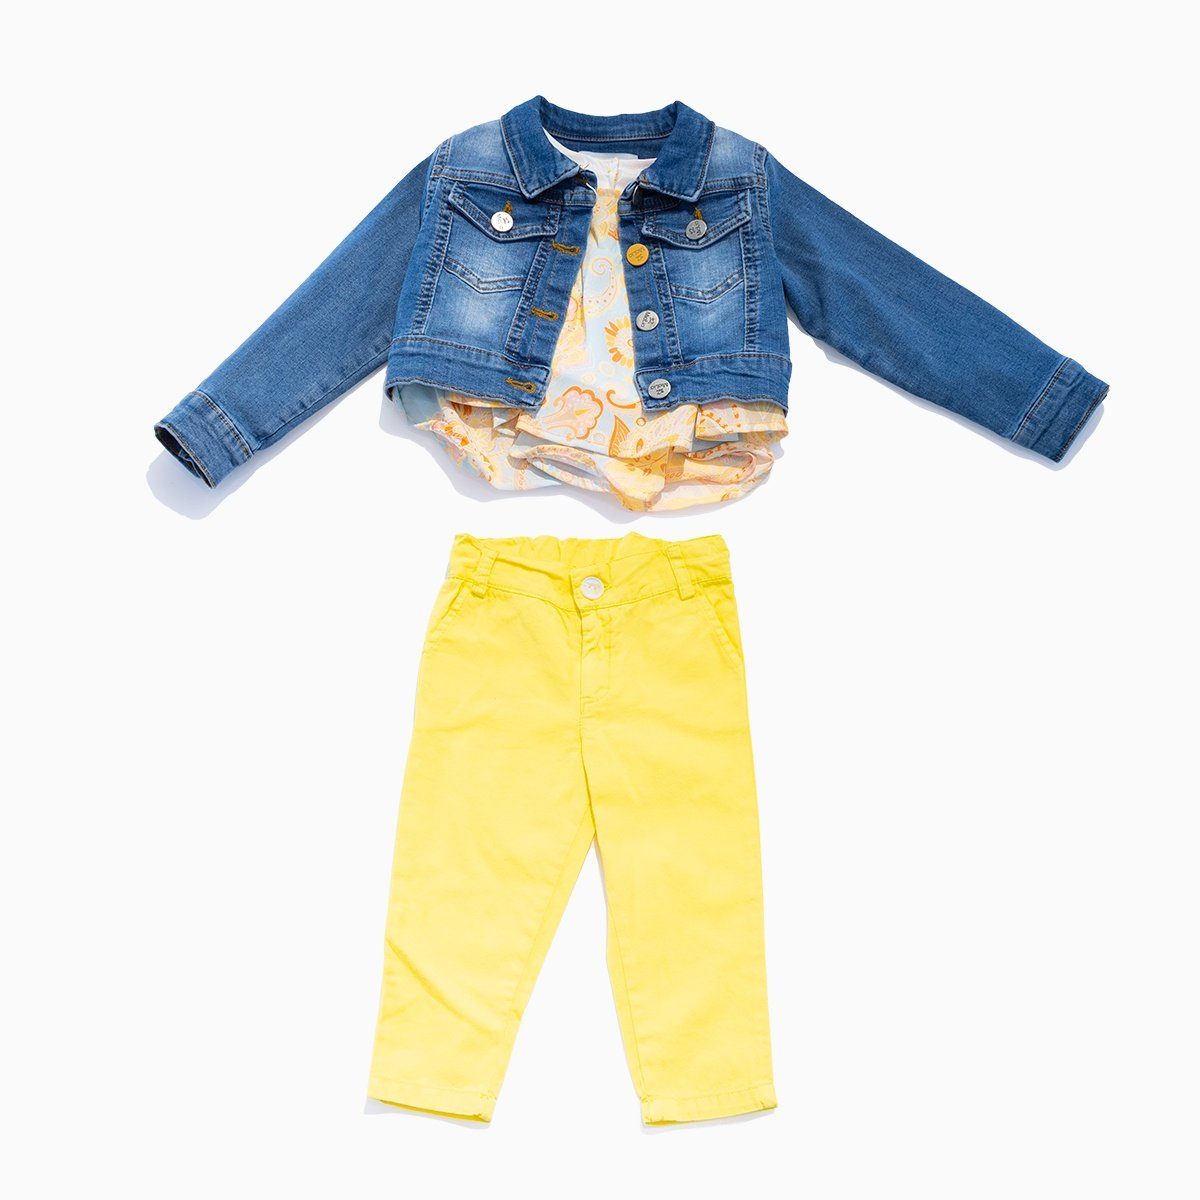 Jeans Jacket Top & Pants 3 Piece Toddler Set - Yellow & Orange KIDS WEAR Mialia 